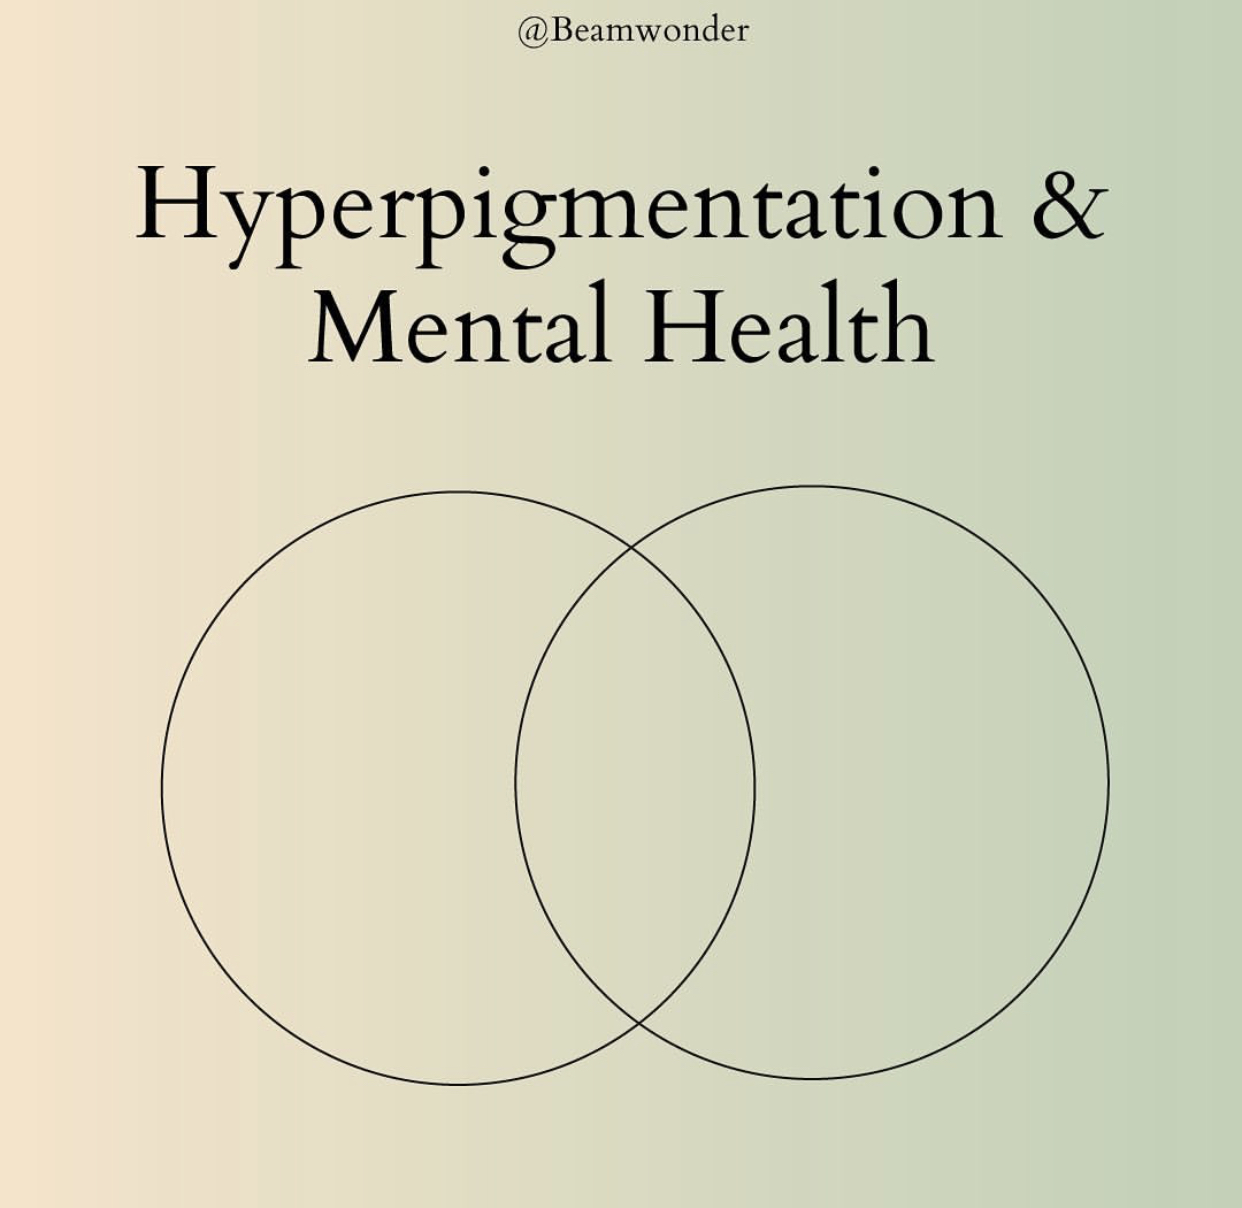 Hyperpigmentation & mental health